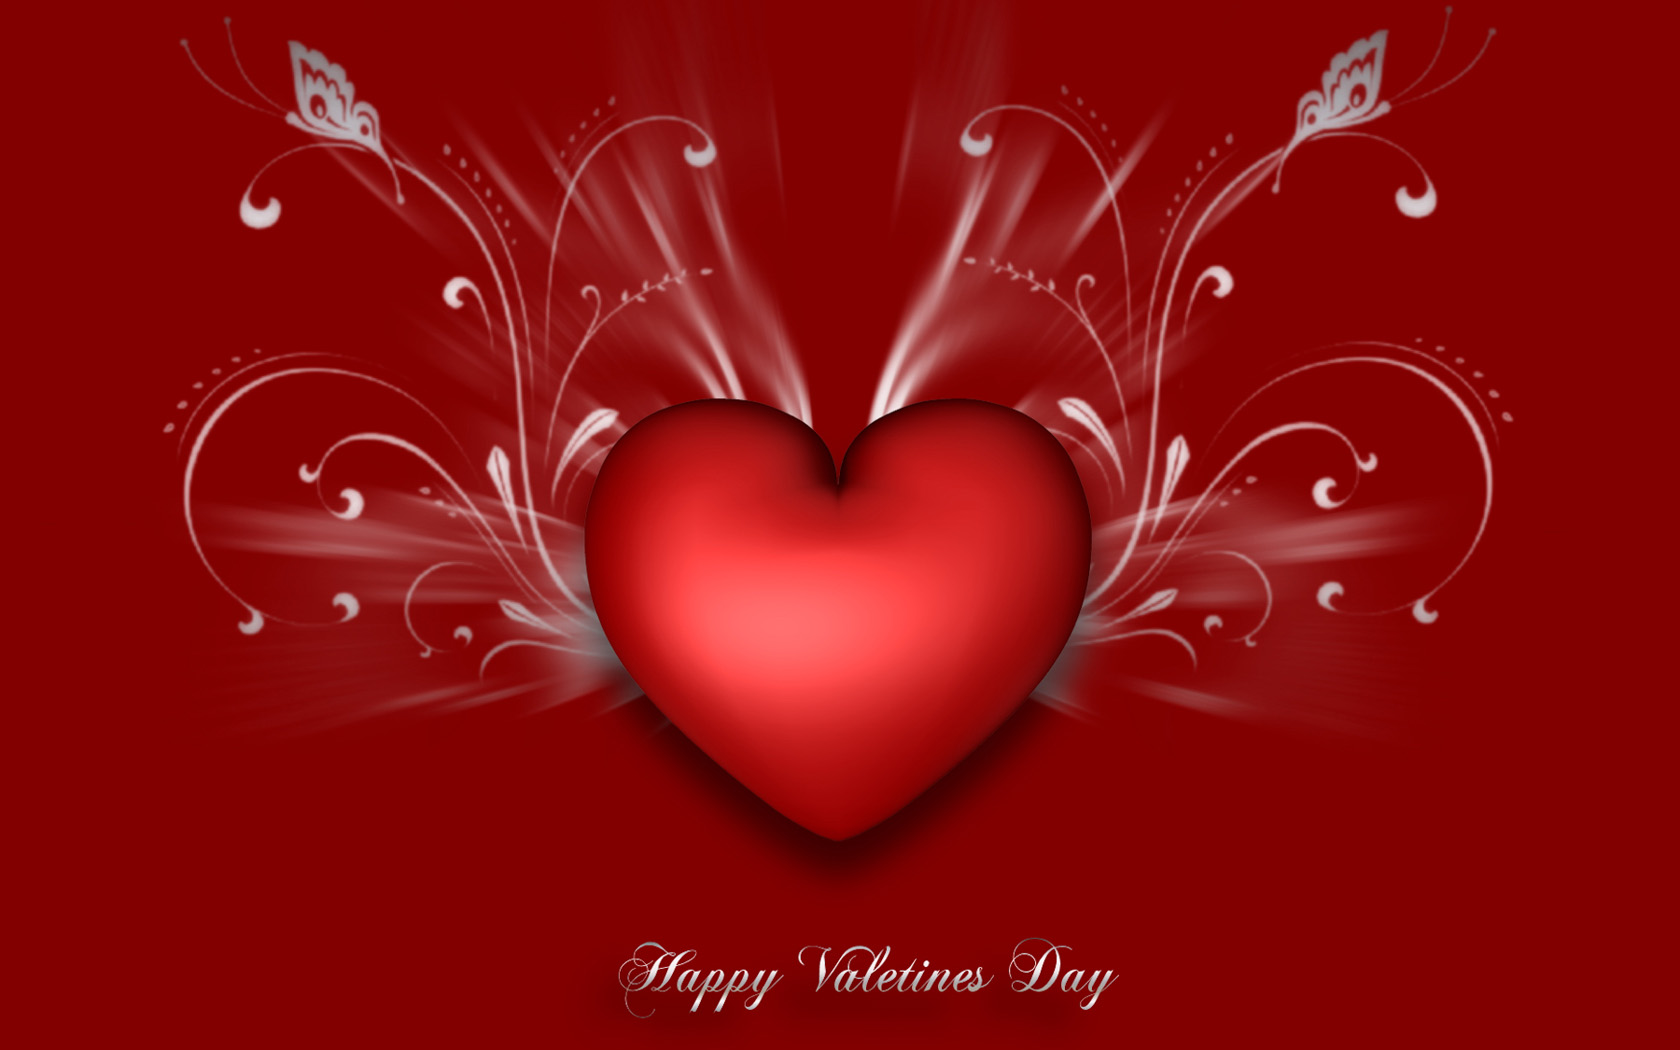 Valentine's Day Image